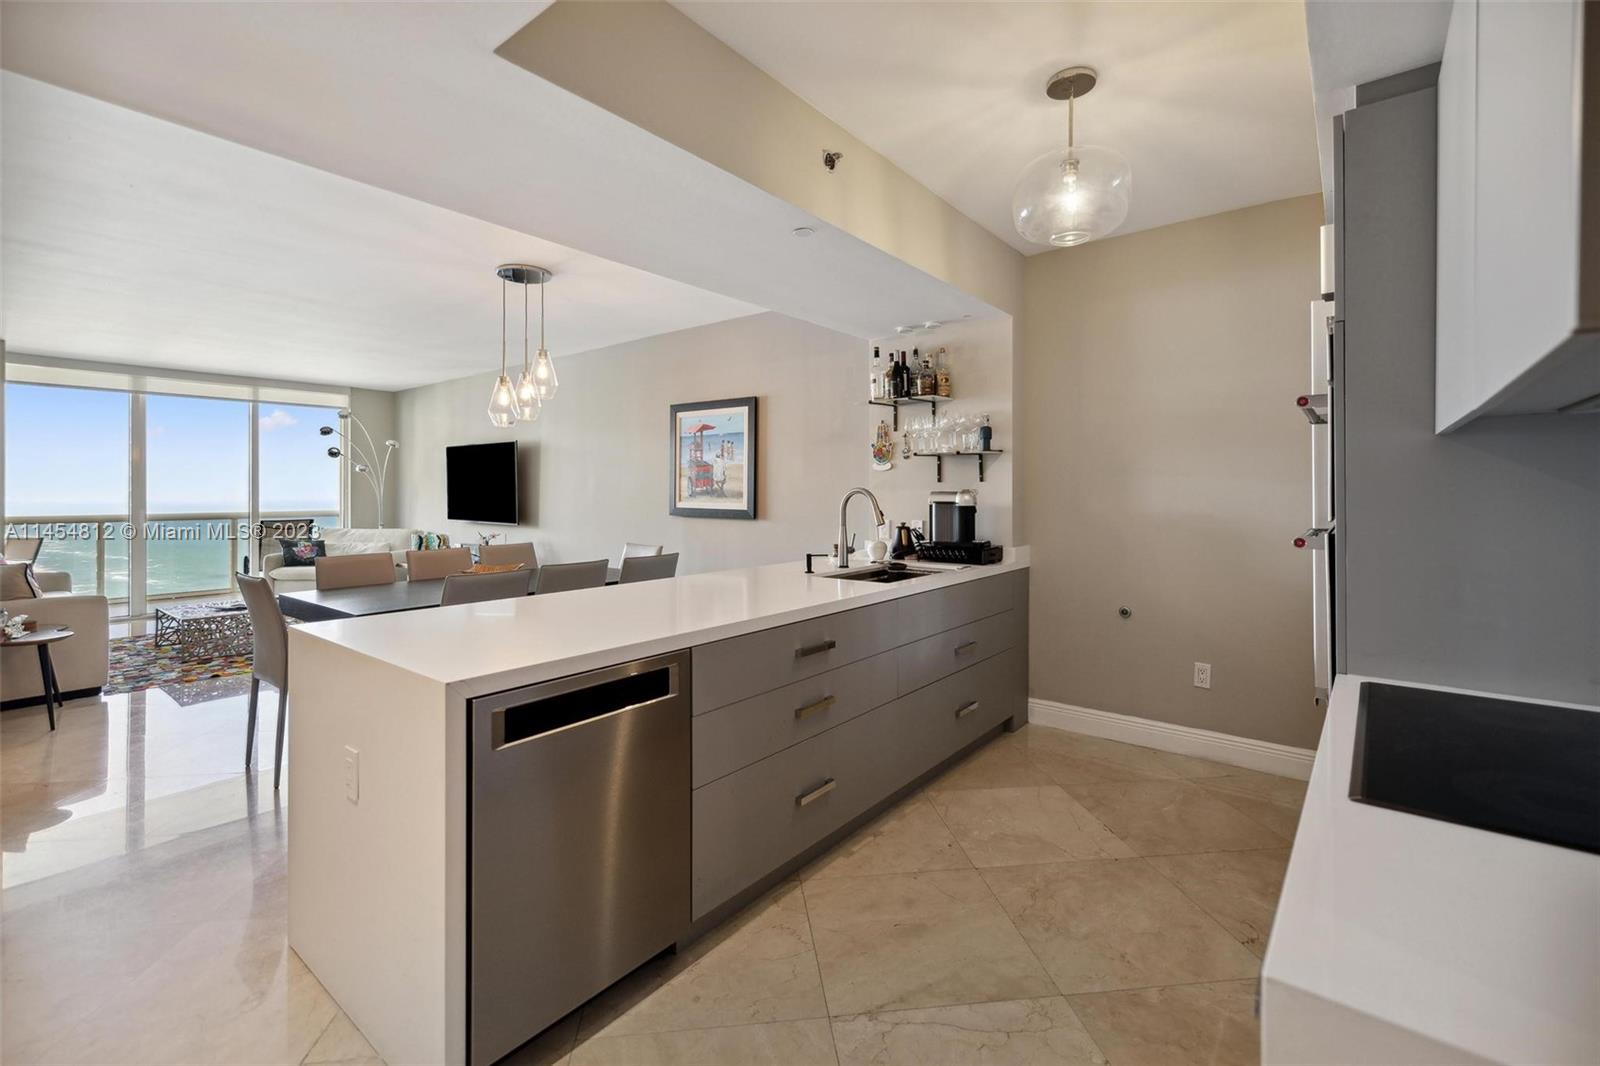 Rental Property at 1830 S Ocean Dr 4211, Hallandale Beach, Broward County, Florida - Bedrooms: 3 
Bathrooms: 2  - $7,000 MO.